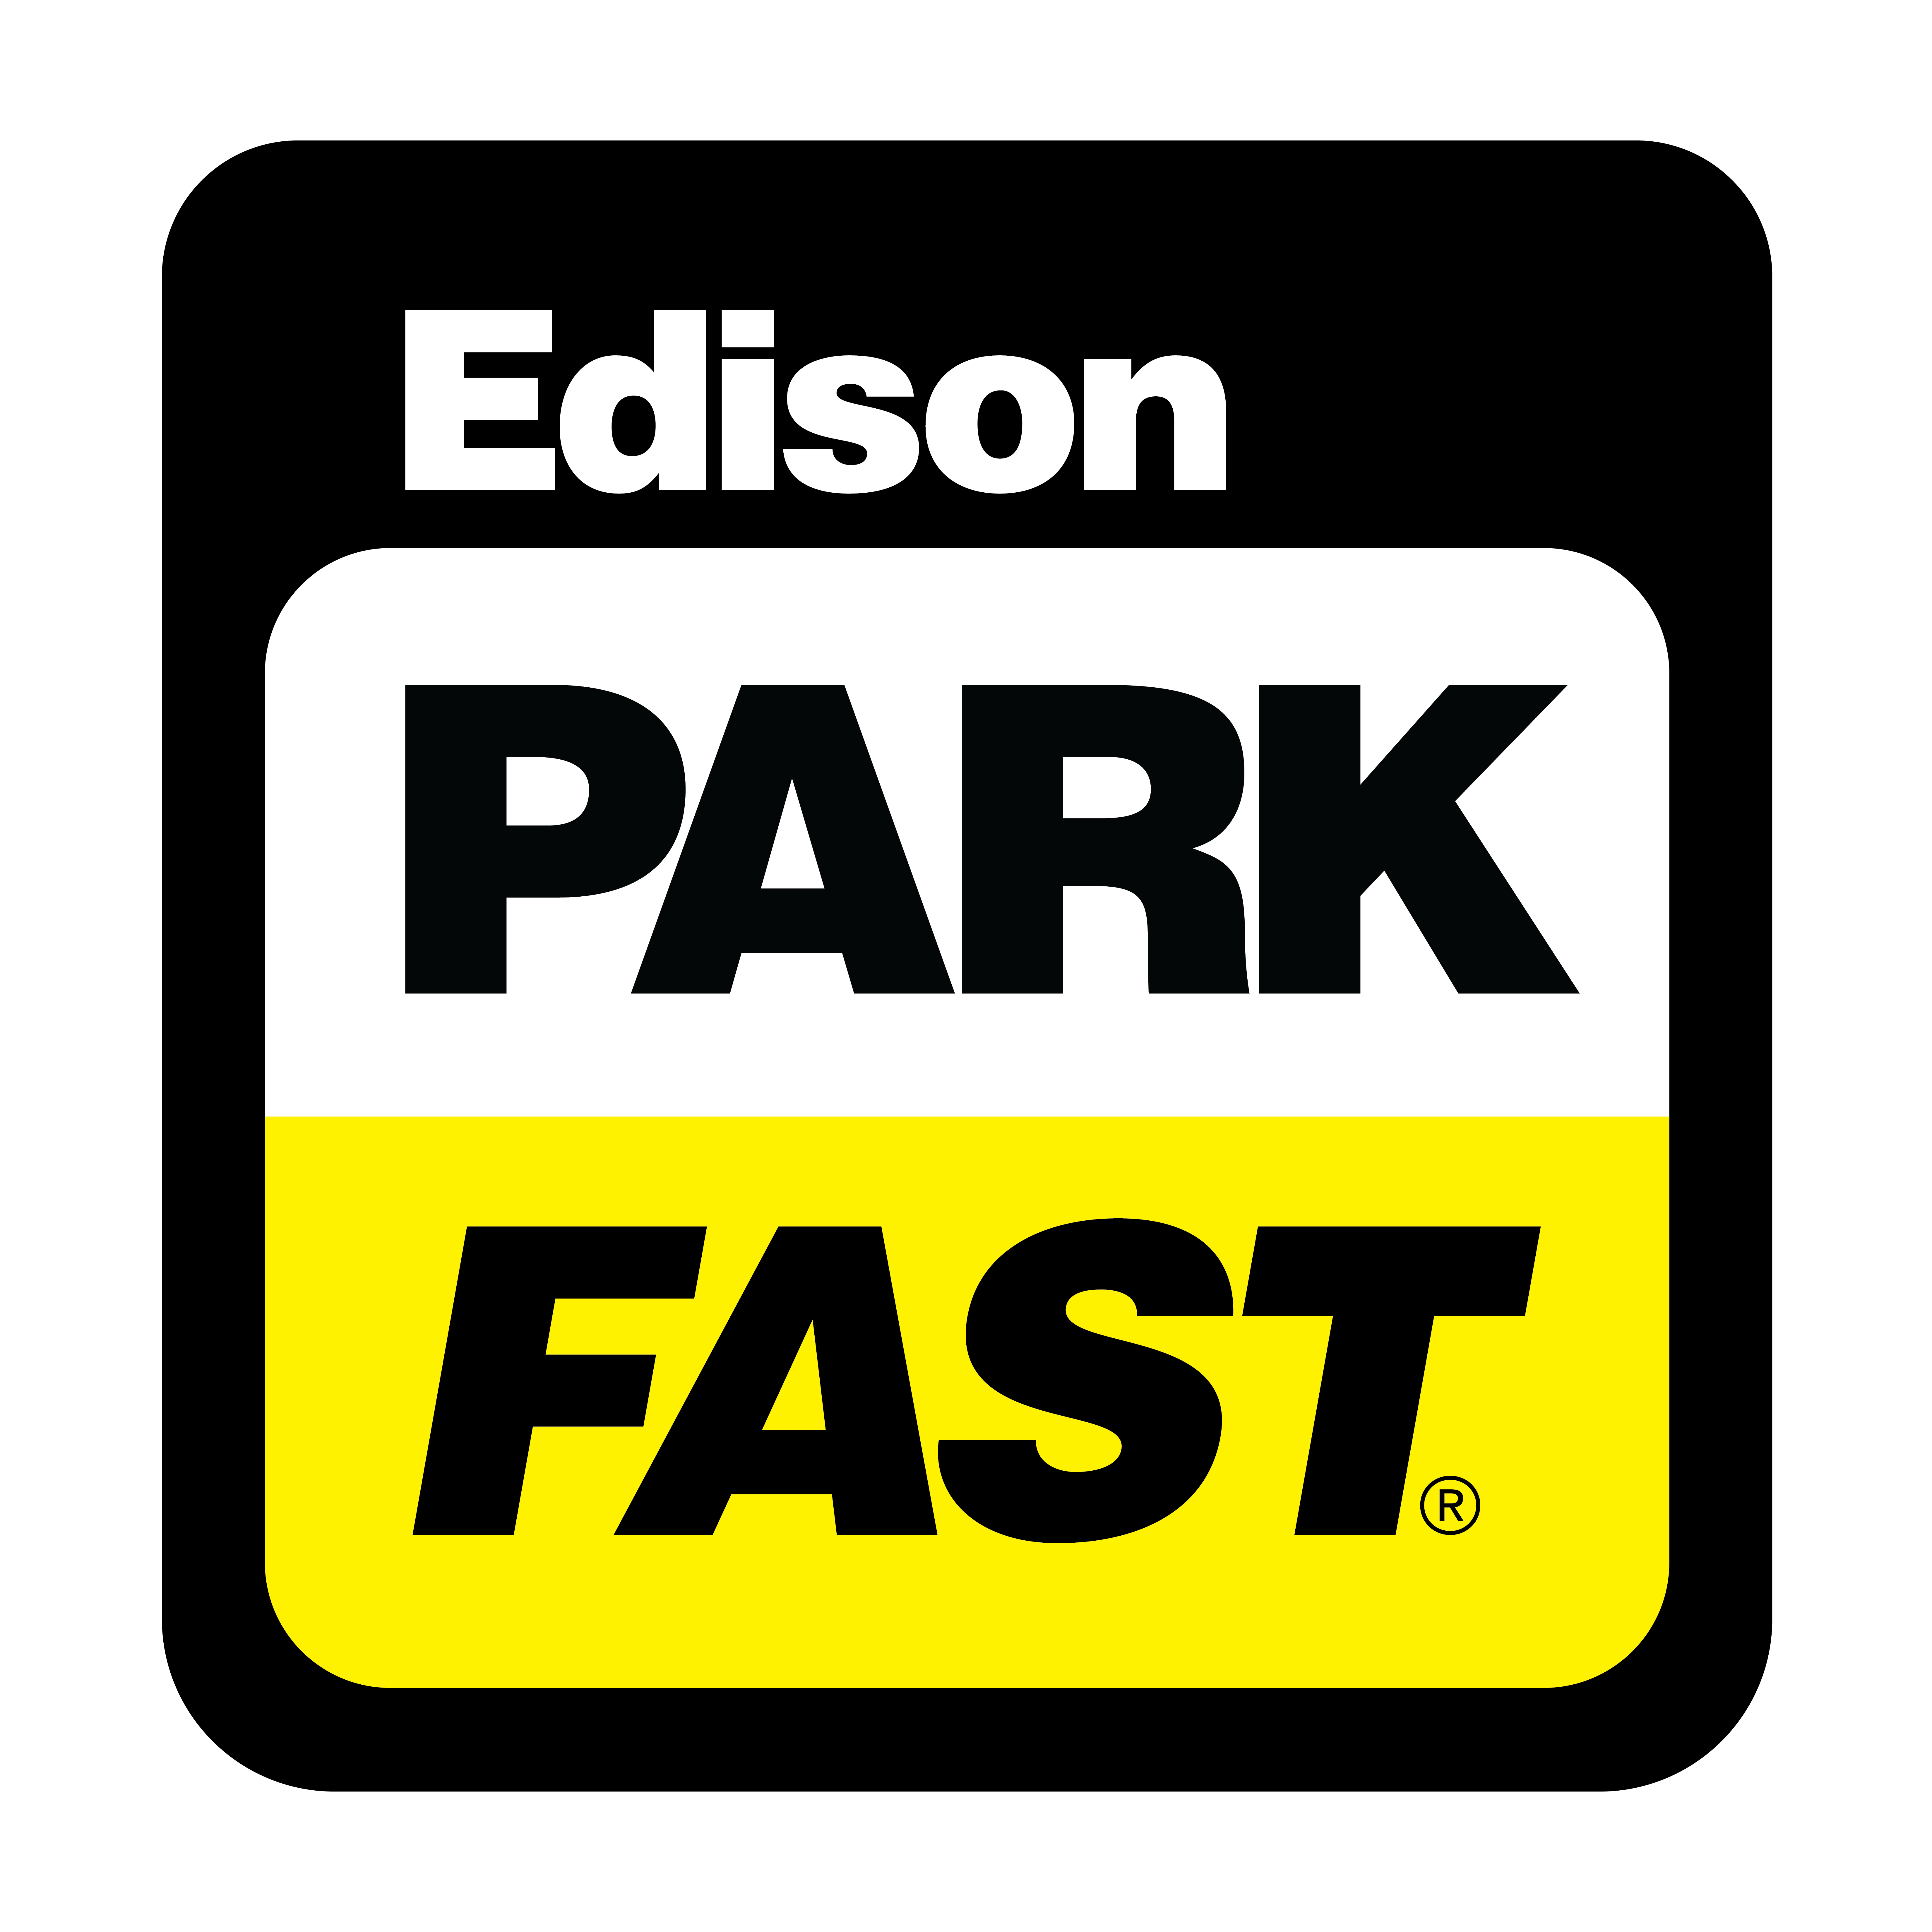 Edison ParkFast - New York, NY 10036 - (888)727-5327 | ShowMeLocal.com